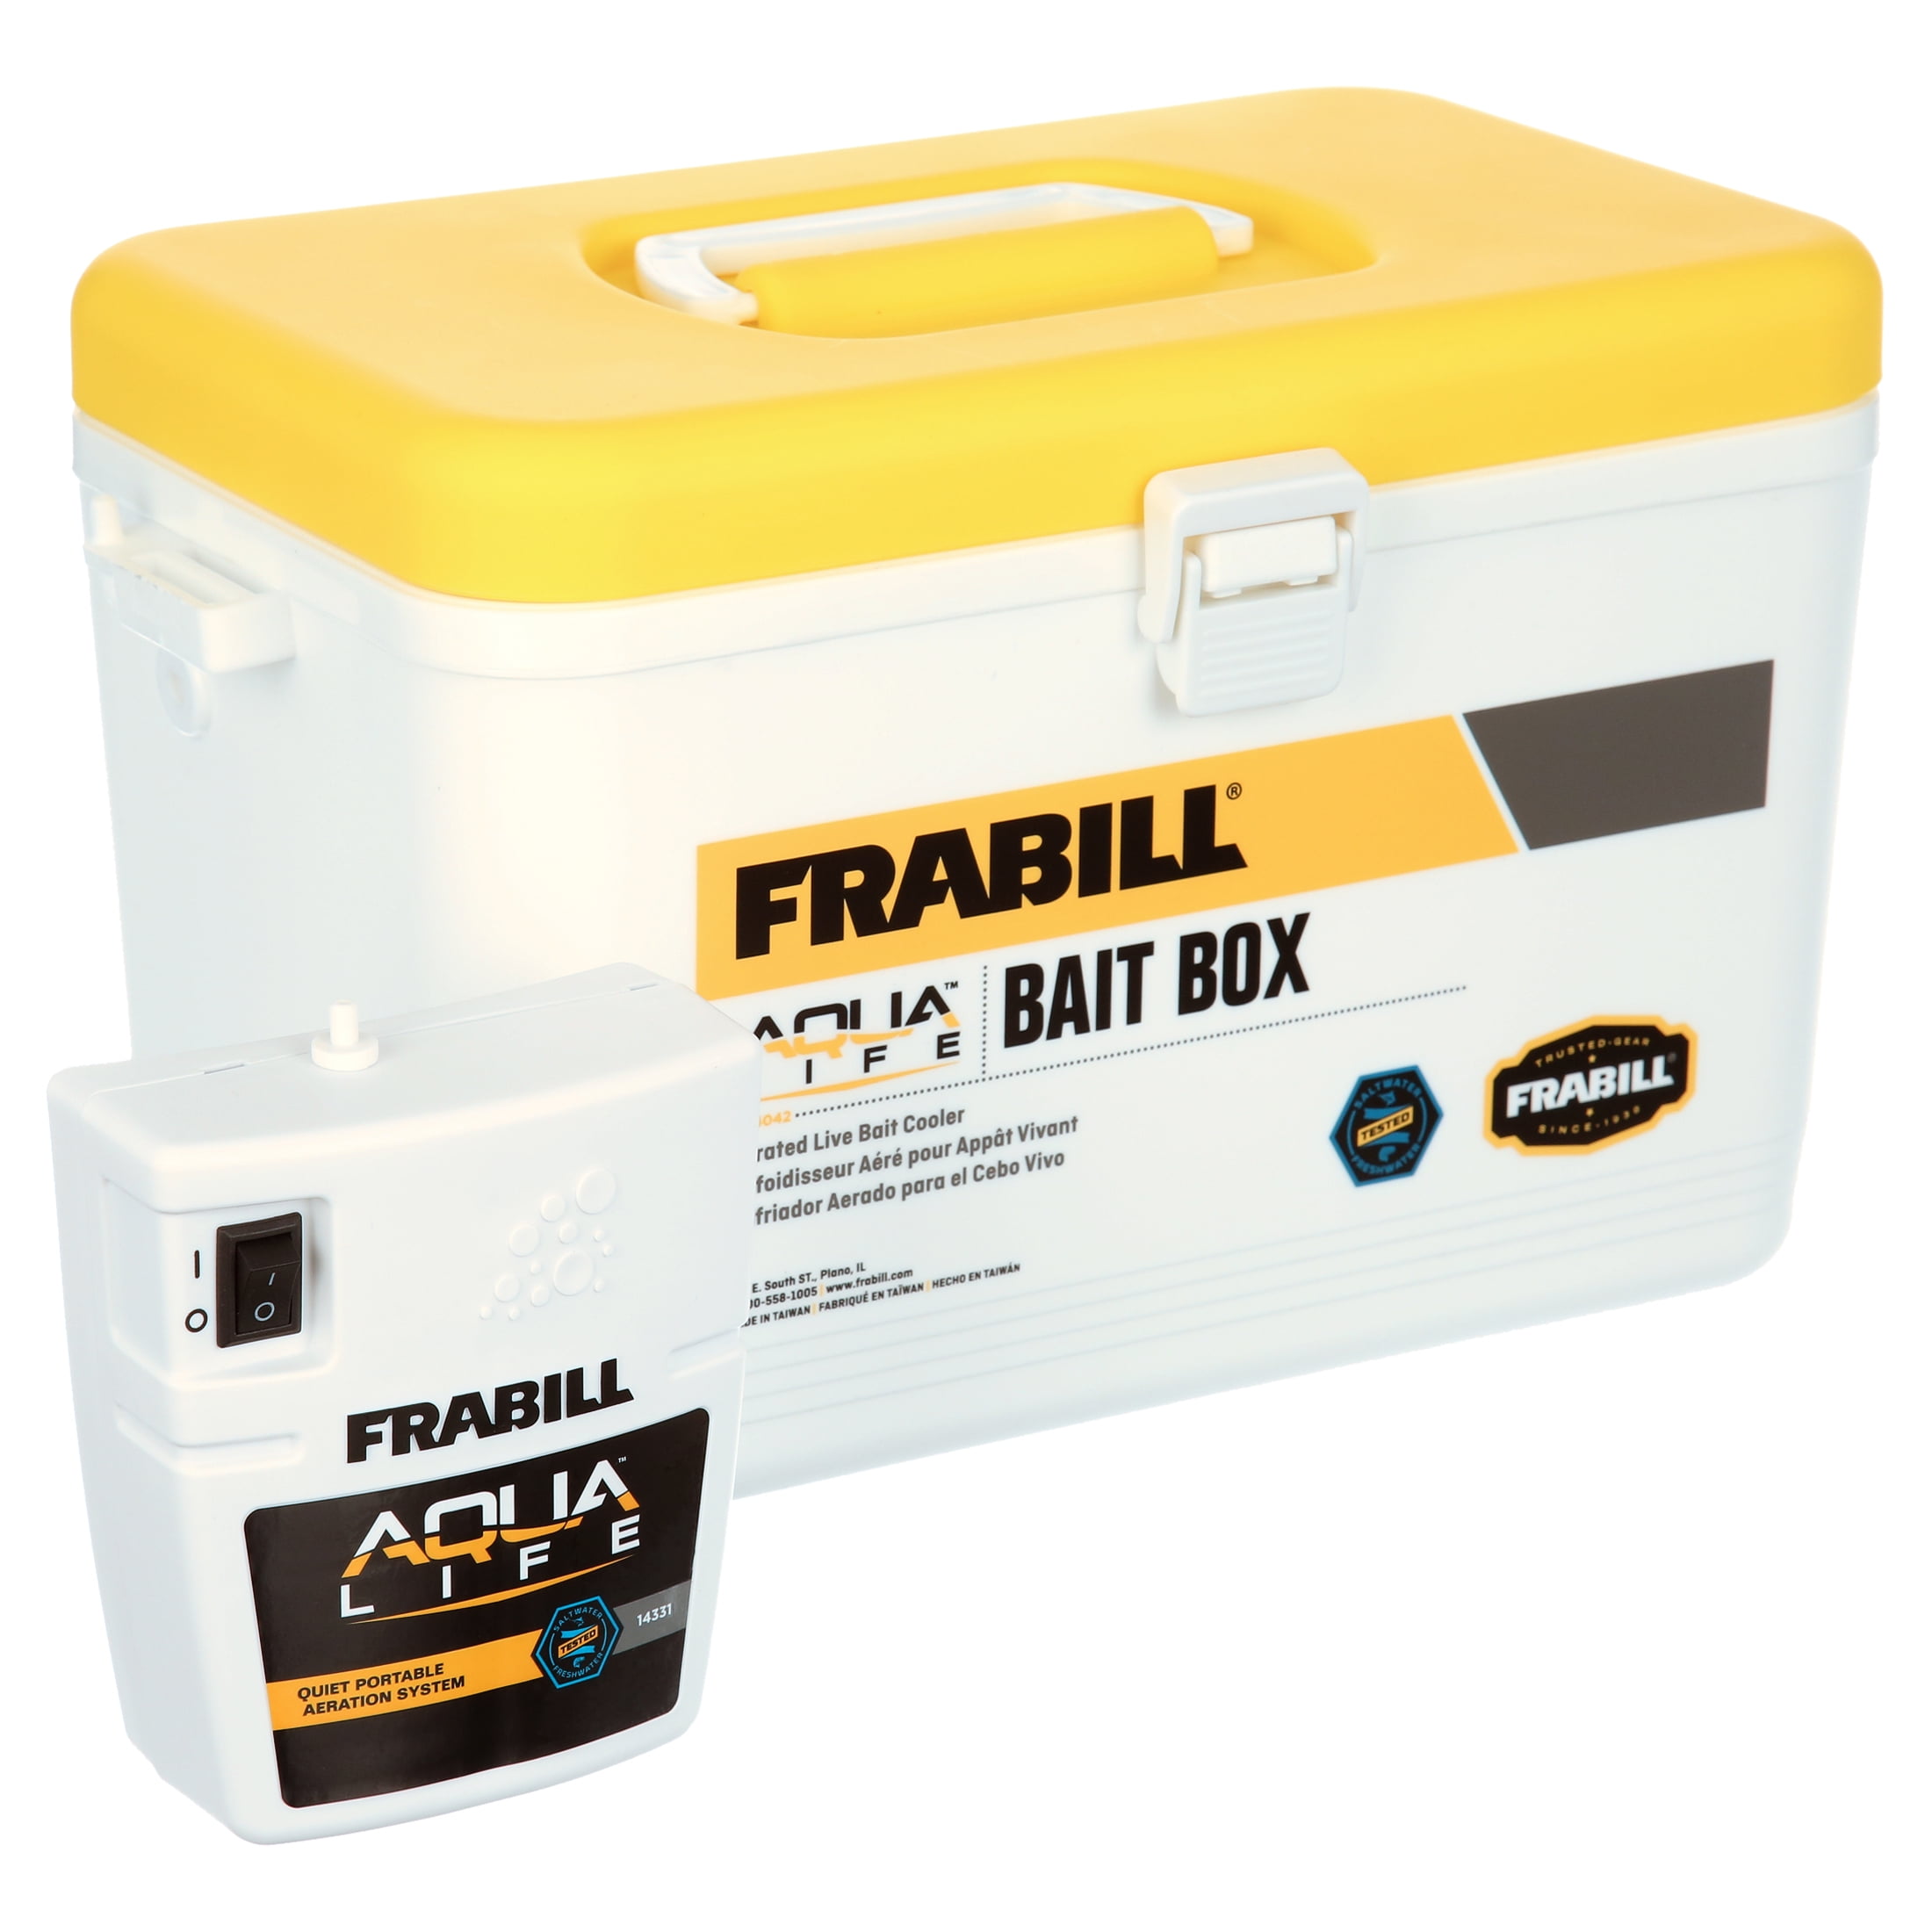 Frabill Live Bait Box with - Quiet Aerator, Air line, Air stone